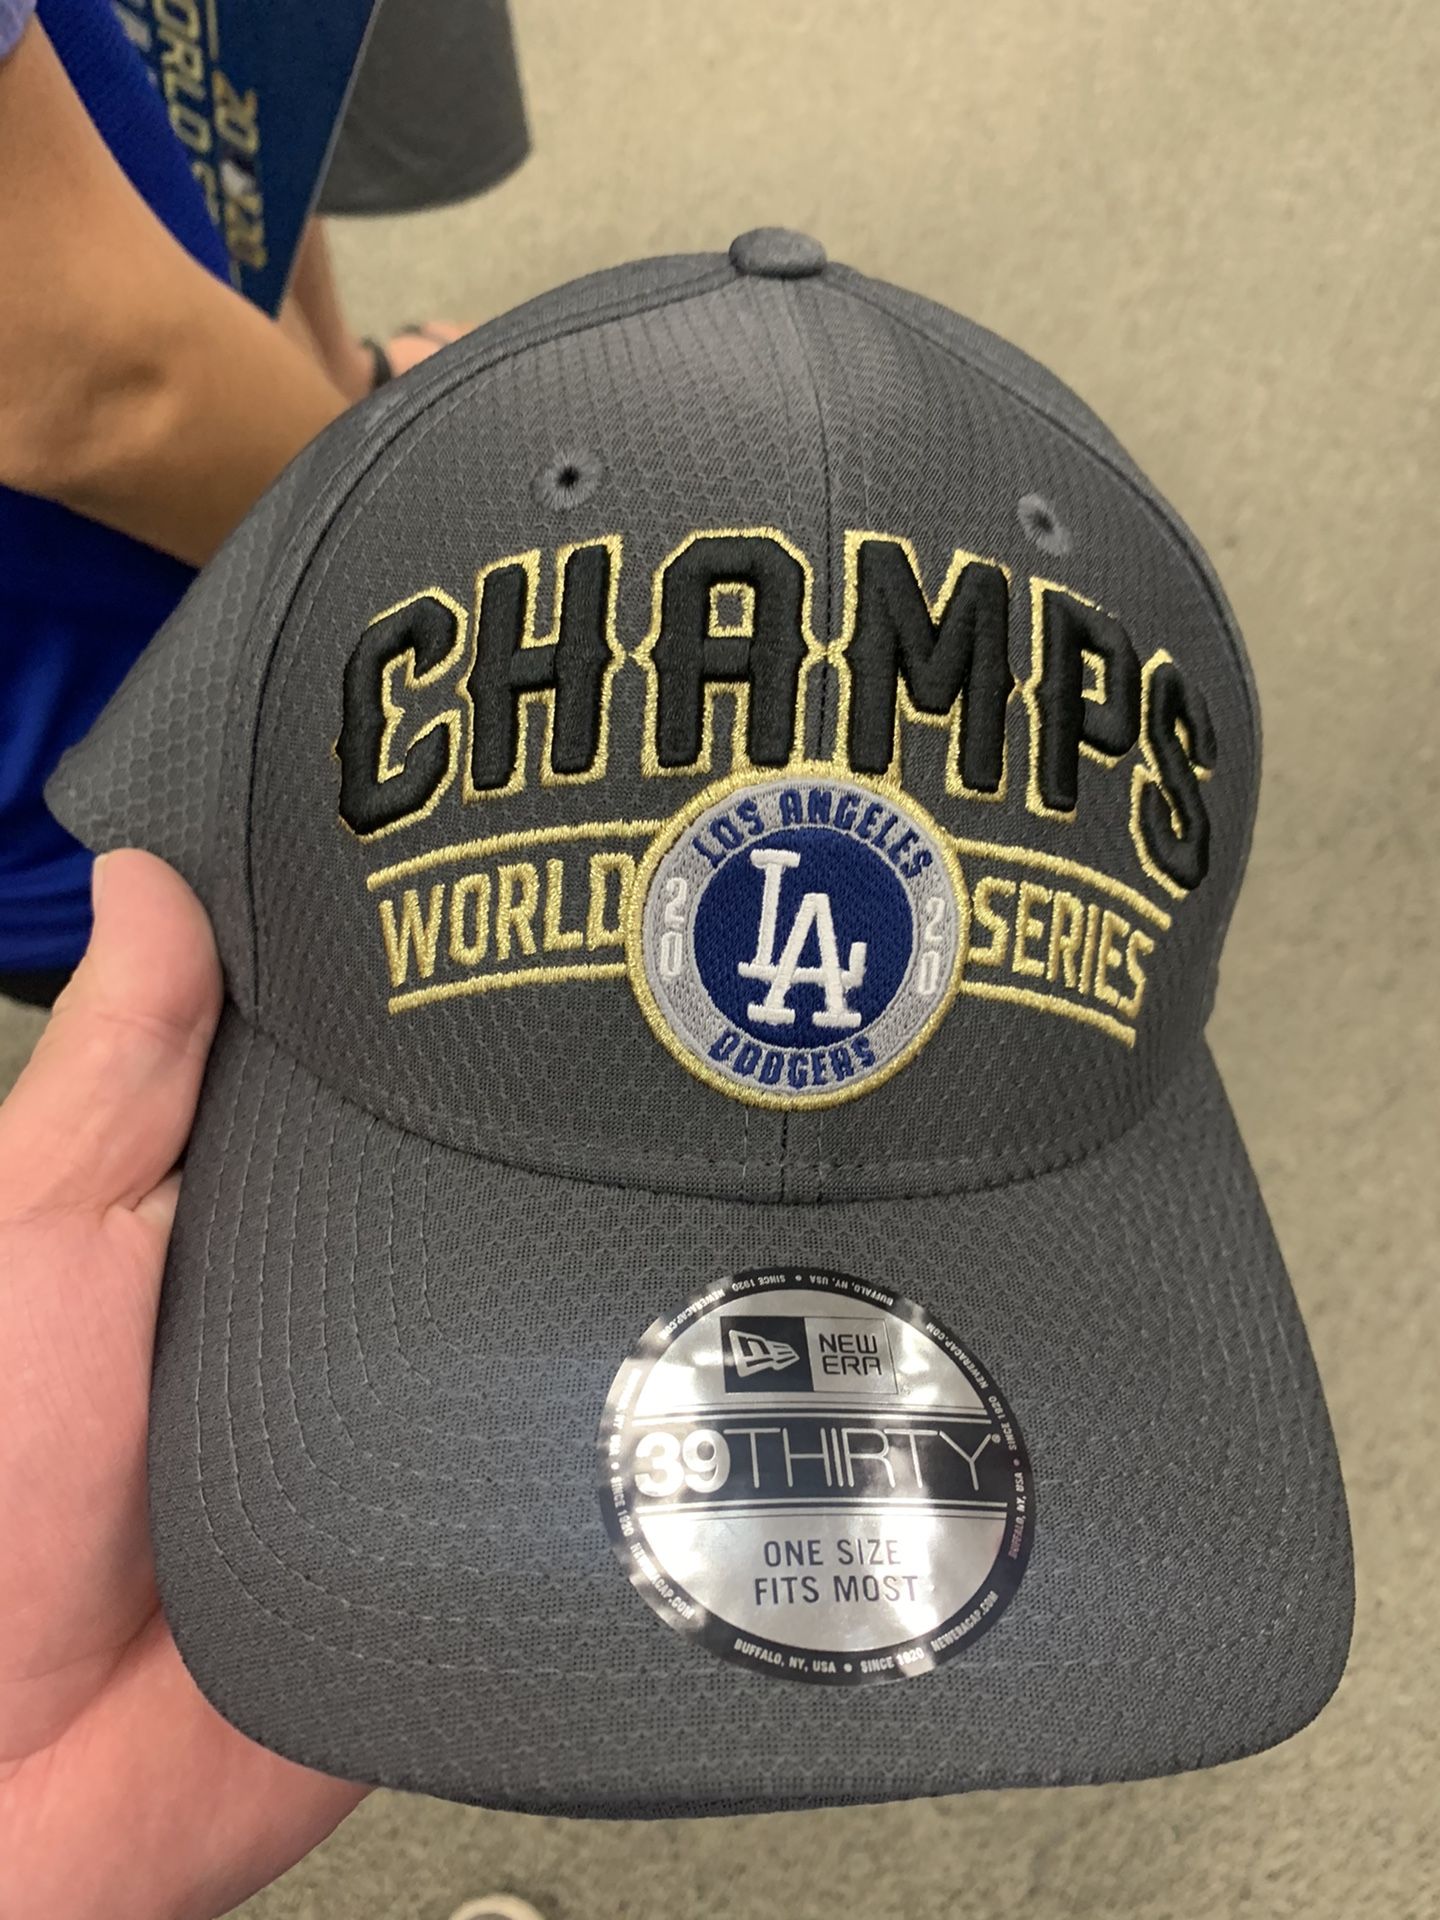 New World Series Dodgers hat - 2020